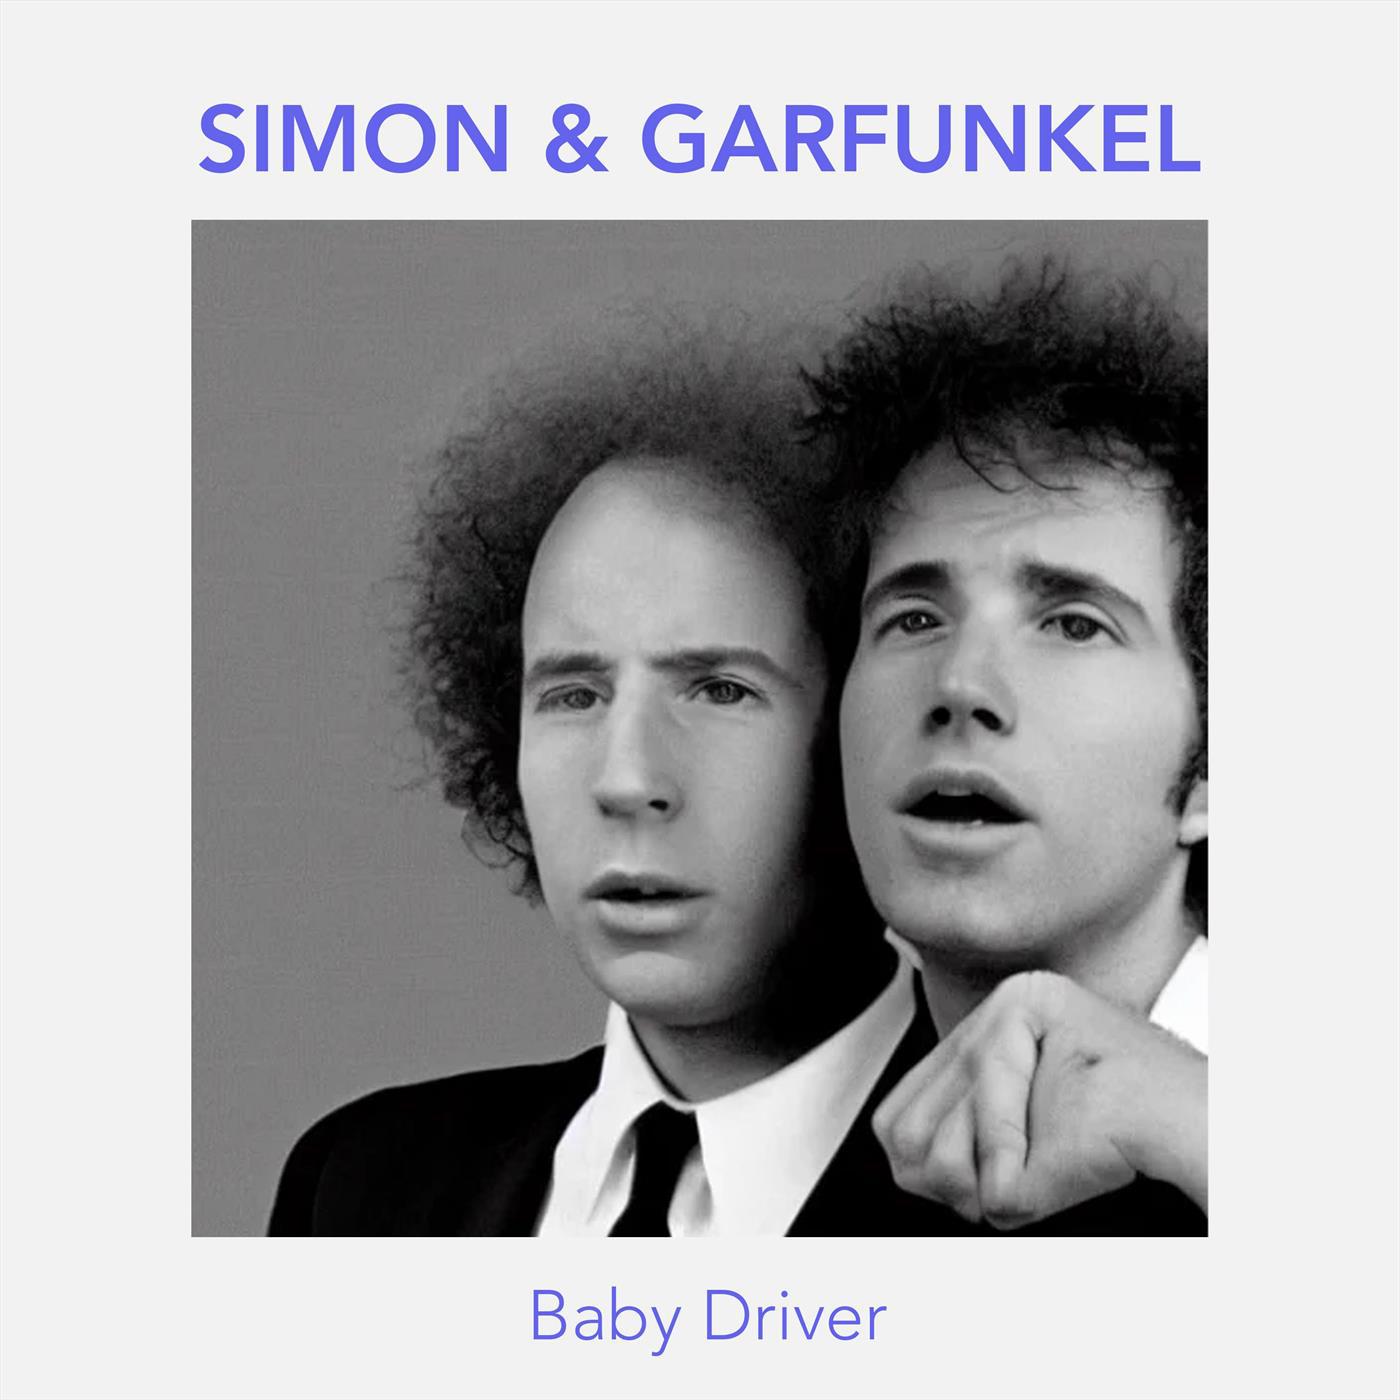 Simon & Garfunkel - So Long, Frank Lloyd Wright